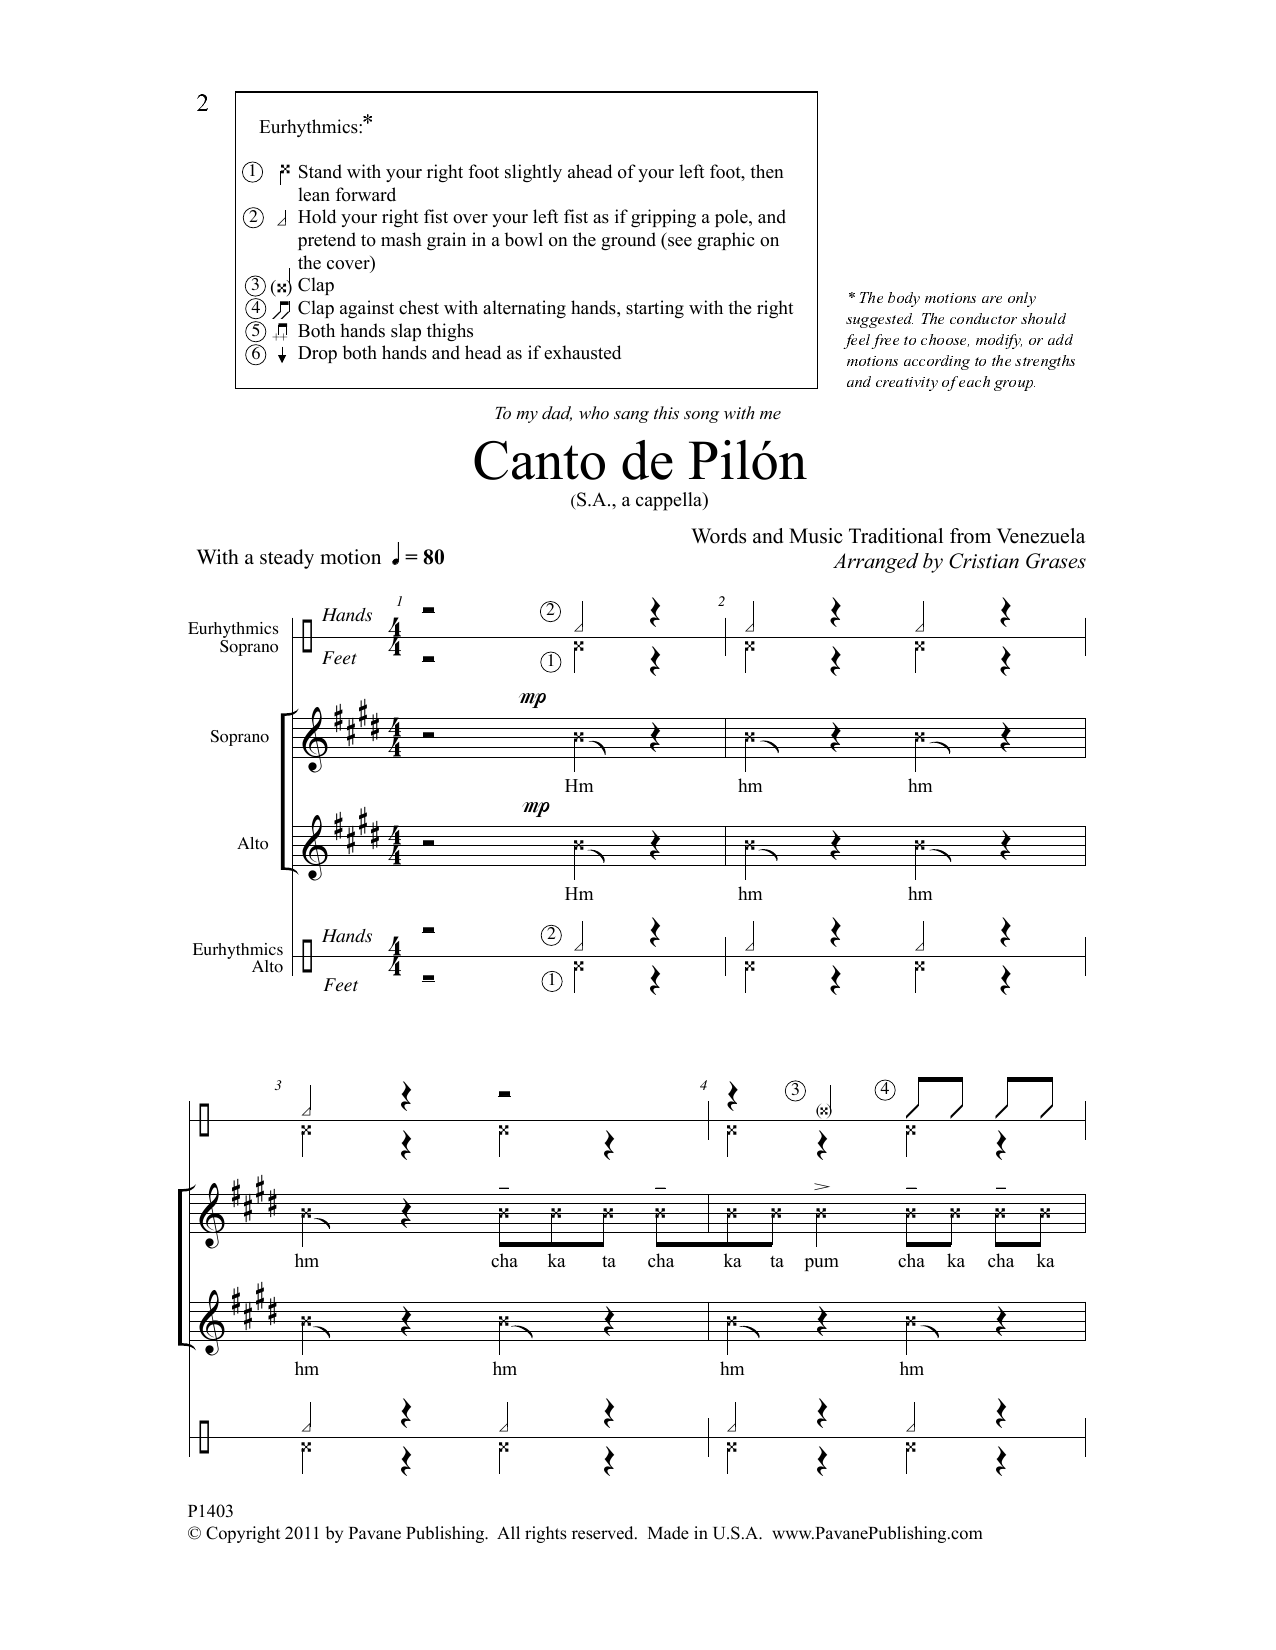 Cristian Grases Canto de Pilon Sheet Music Notes & Chords for SAB Choir - Download or Print PDF